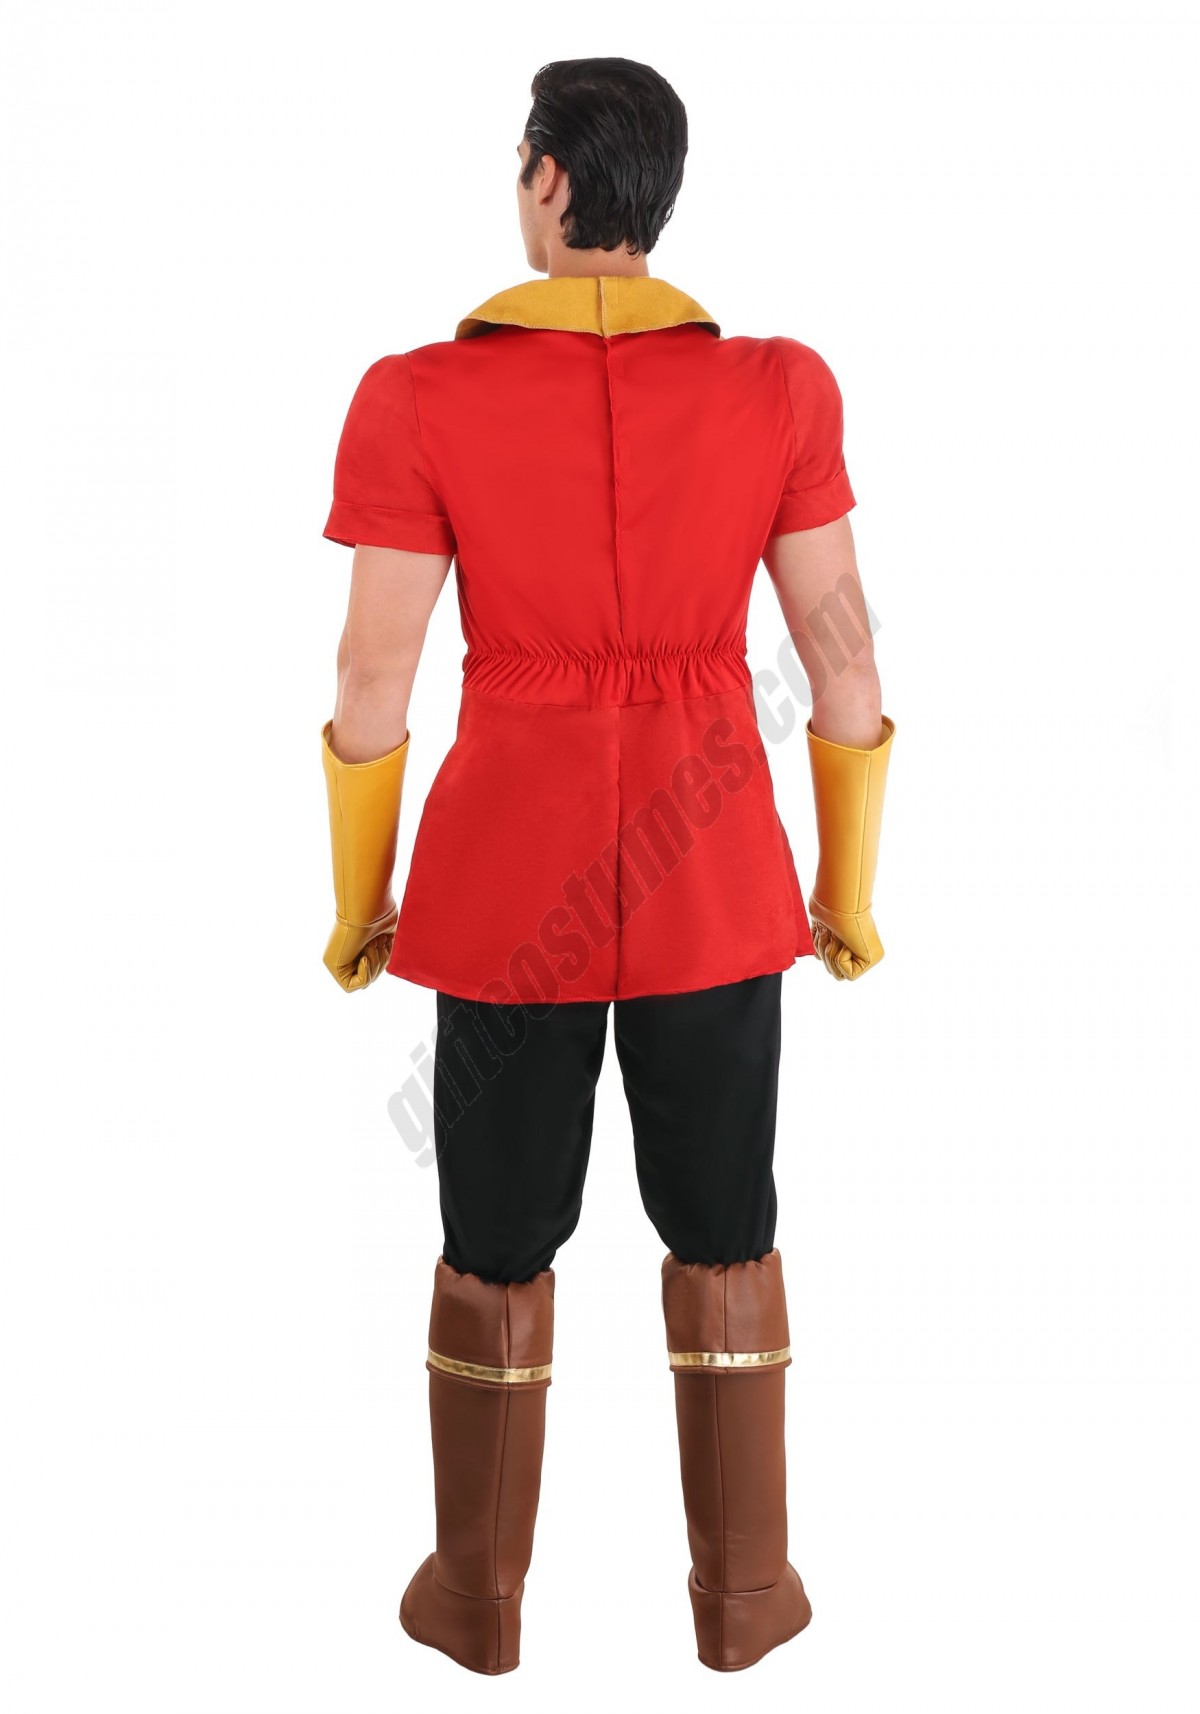 Disney Beauty and the Beast Men's Gaston Costume - Men's - -1